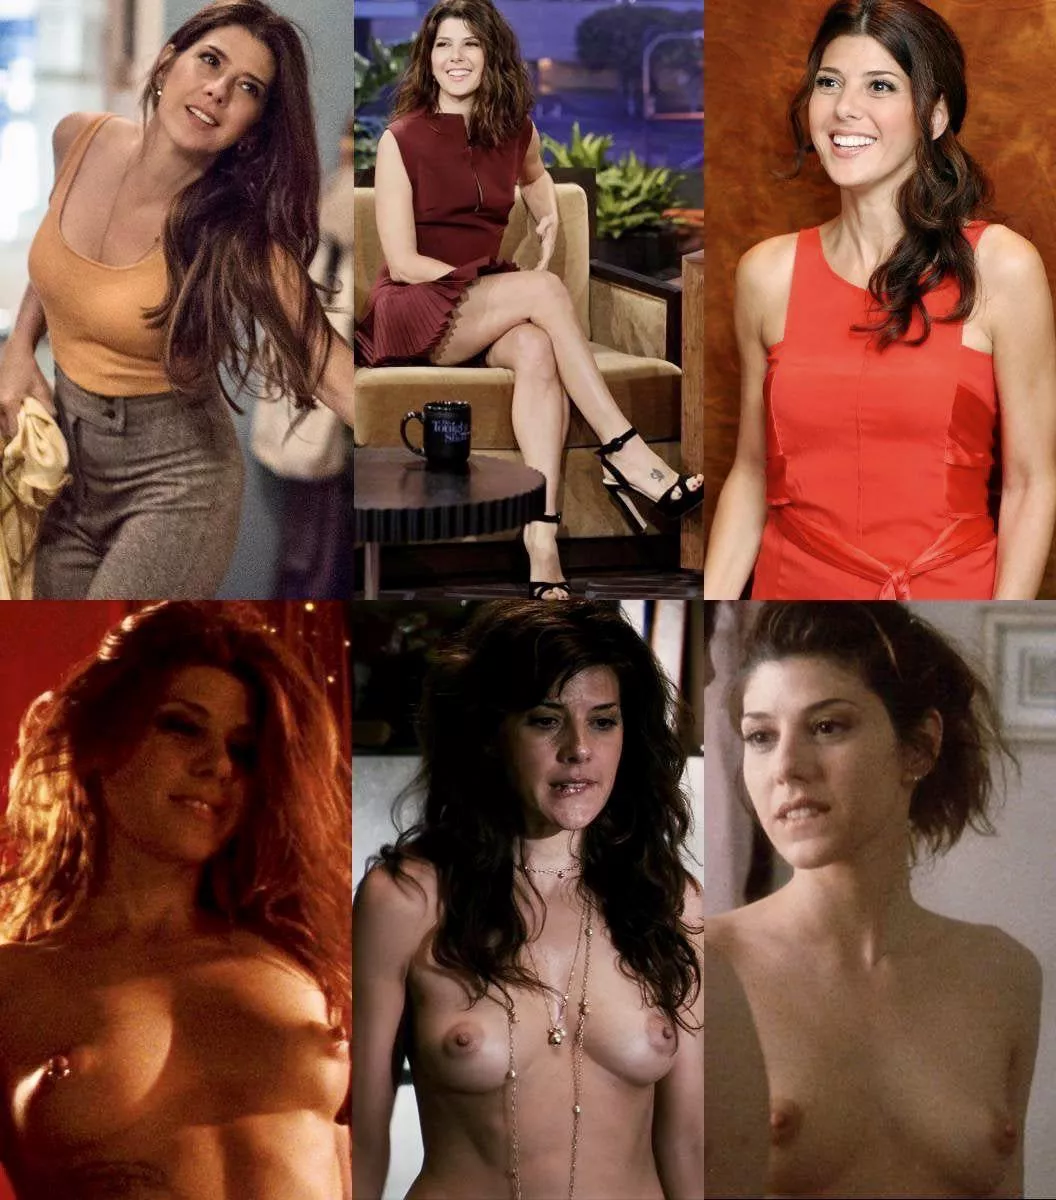 marisa tomei is such a hot milf Nude Lesbianpics.org.